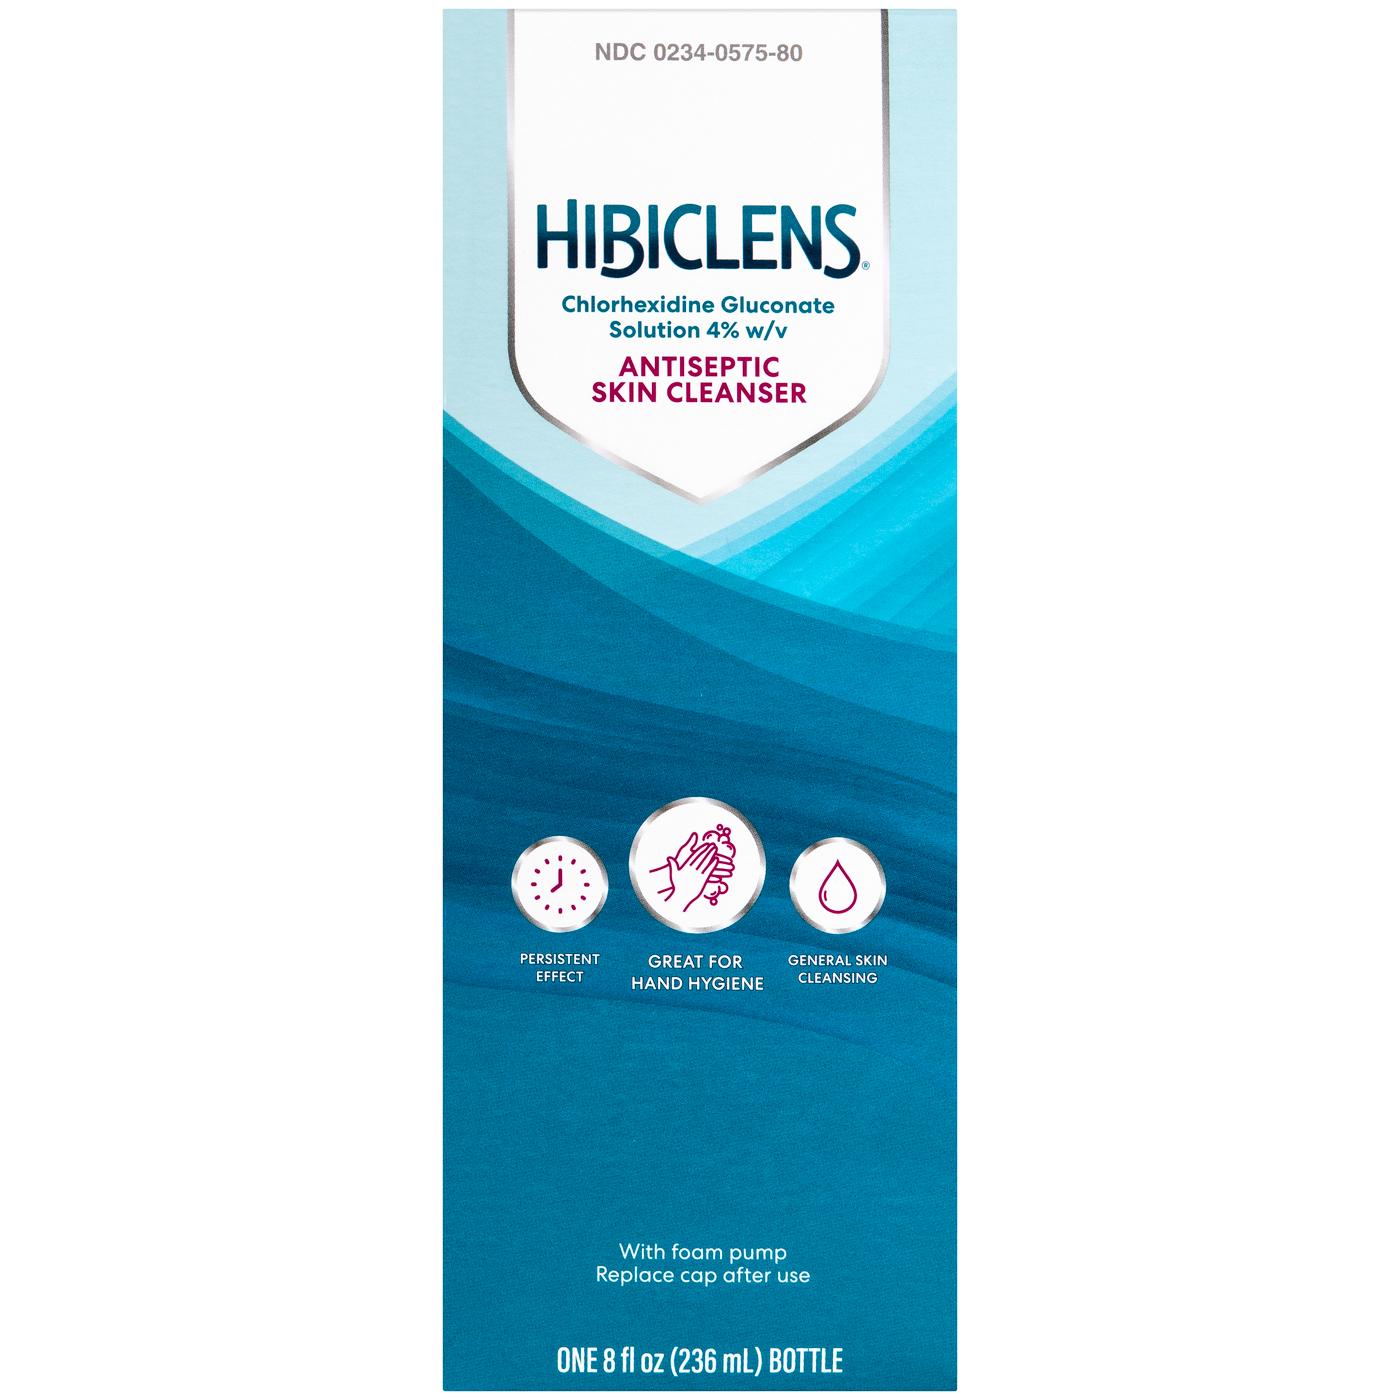 HIBICLENS Antiseptic Skin Cleanser; image 1 of 3